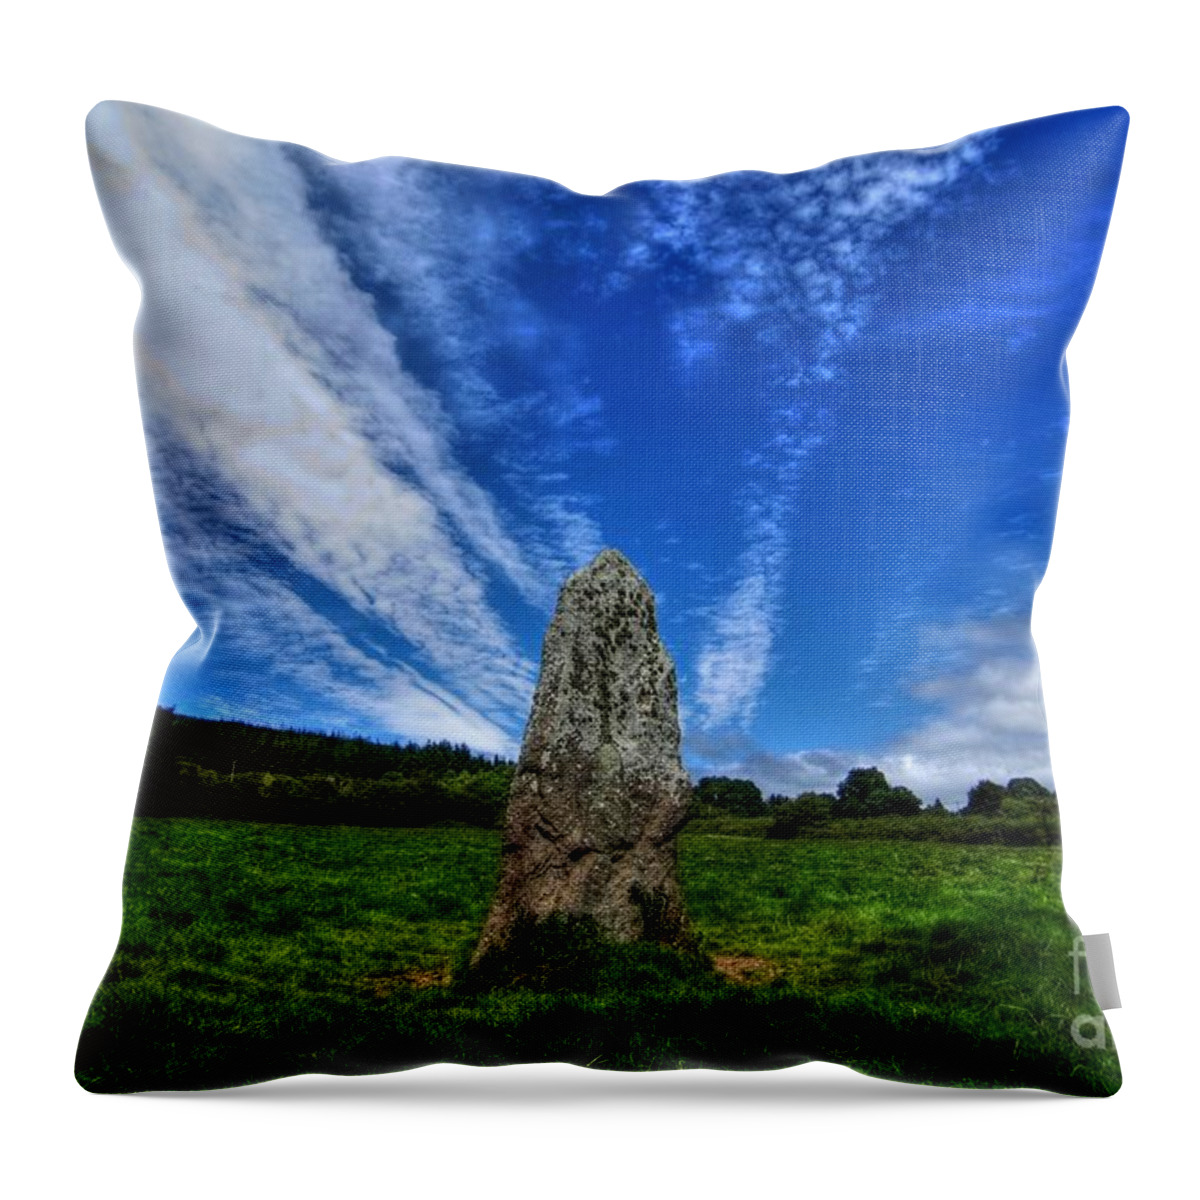 Standing Stone Throw Pillow featuring the photograph The Long stone - Cloch Fada by Joe Cashin